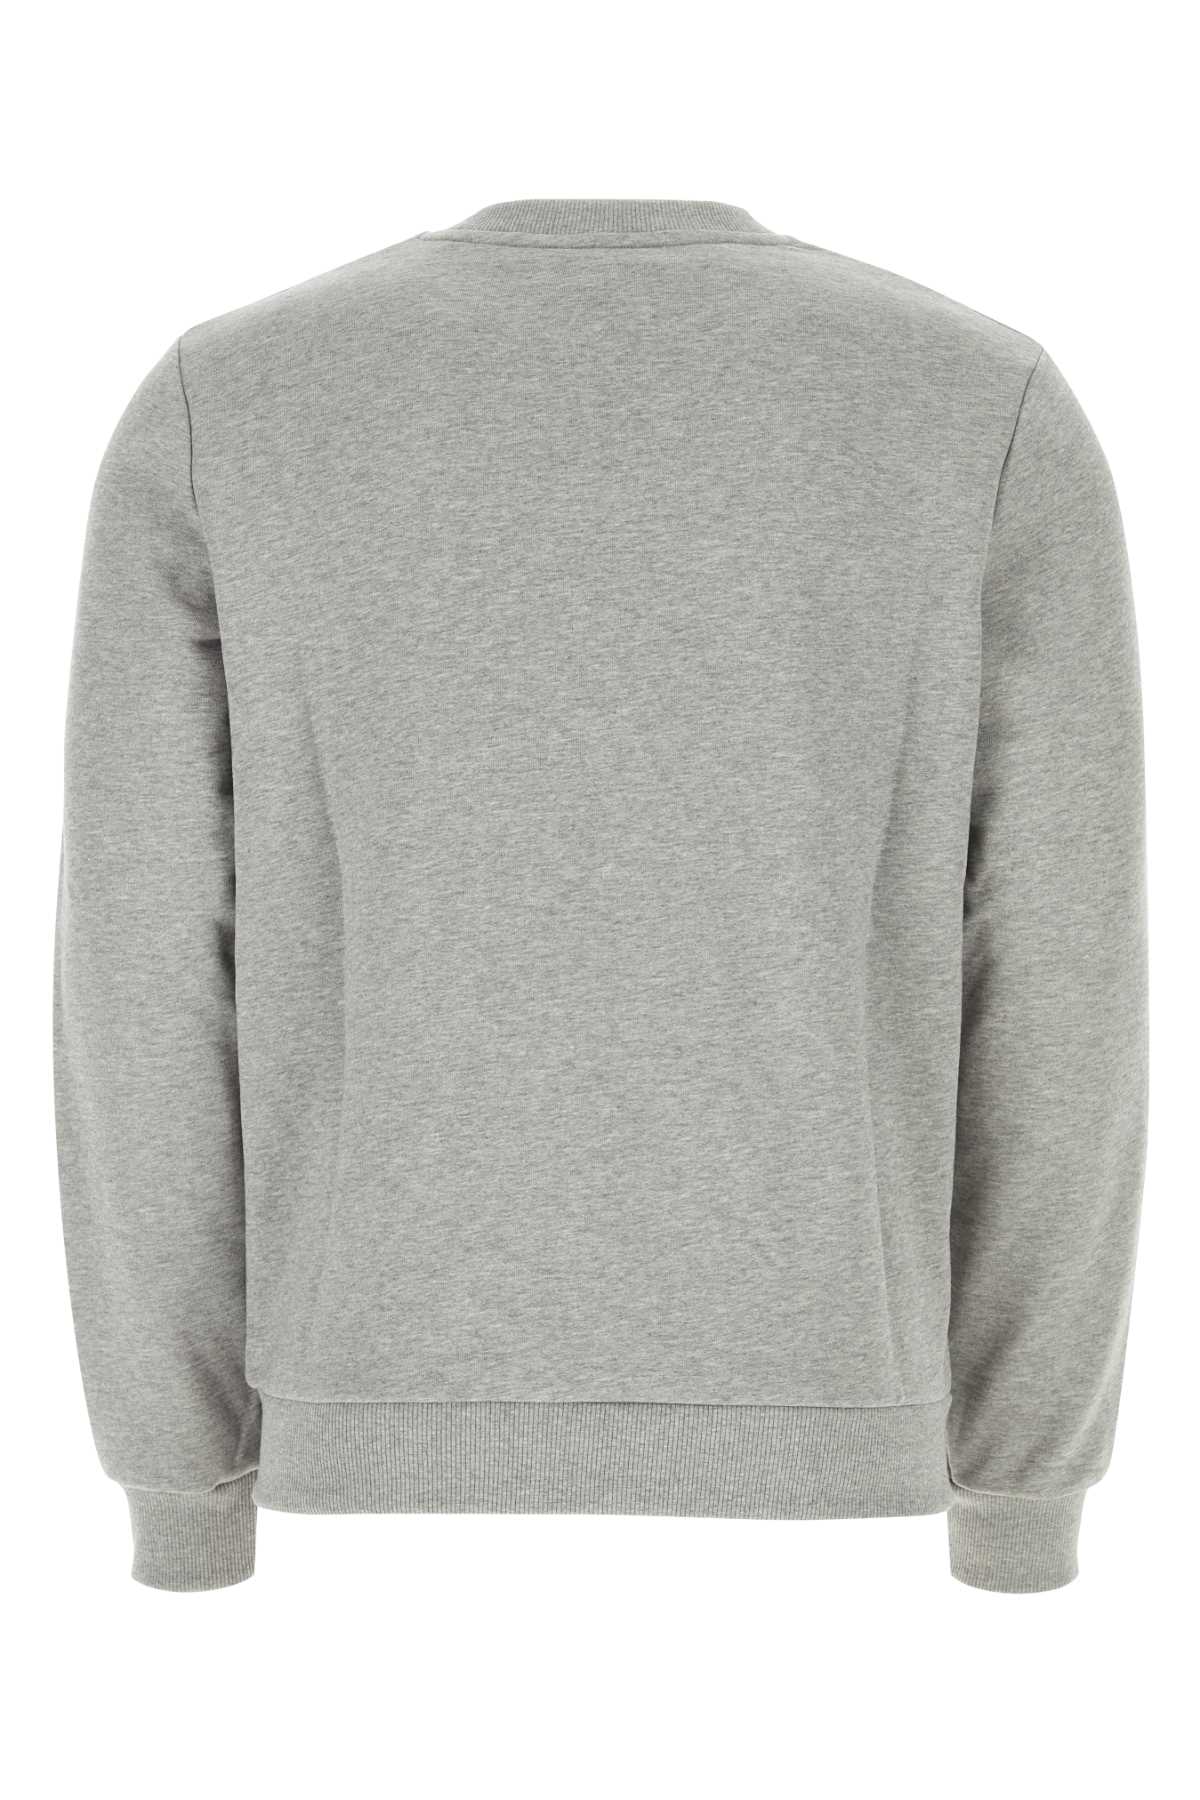 Shop Apc Melange Grey Cotton Sweatshirt In Plaheatheredgrey